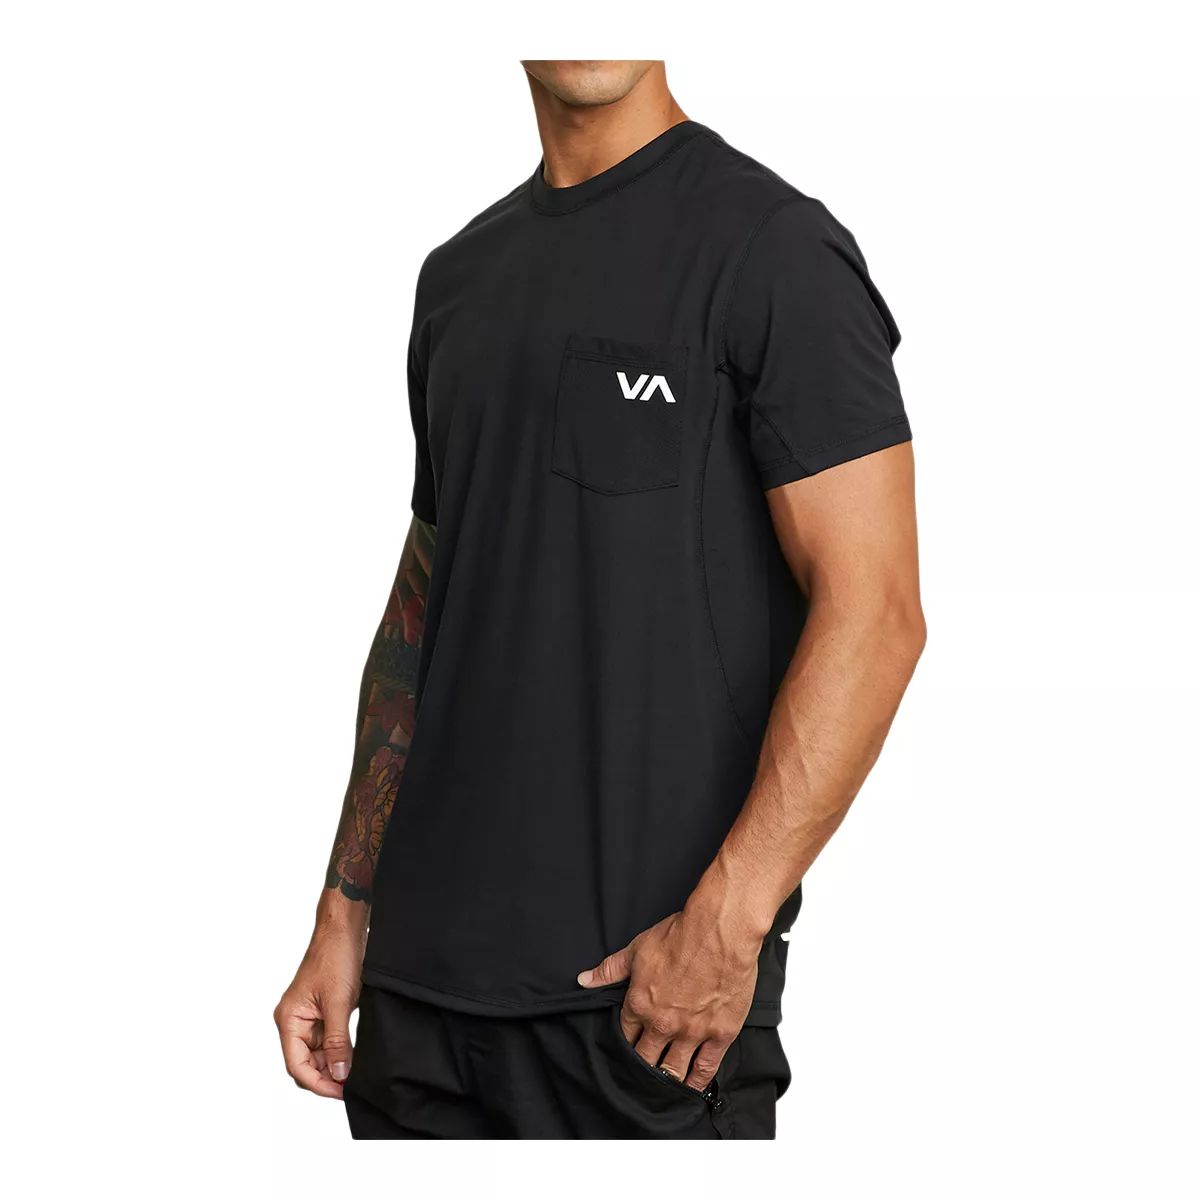 Rvca Sport Men's Vent T Shirt  Short Sleeve Crew Neck Athletic